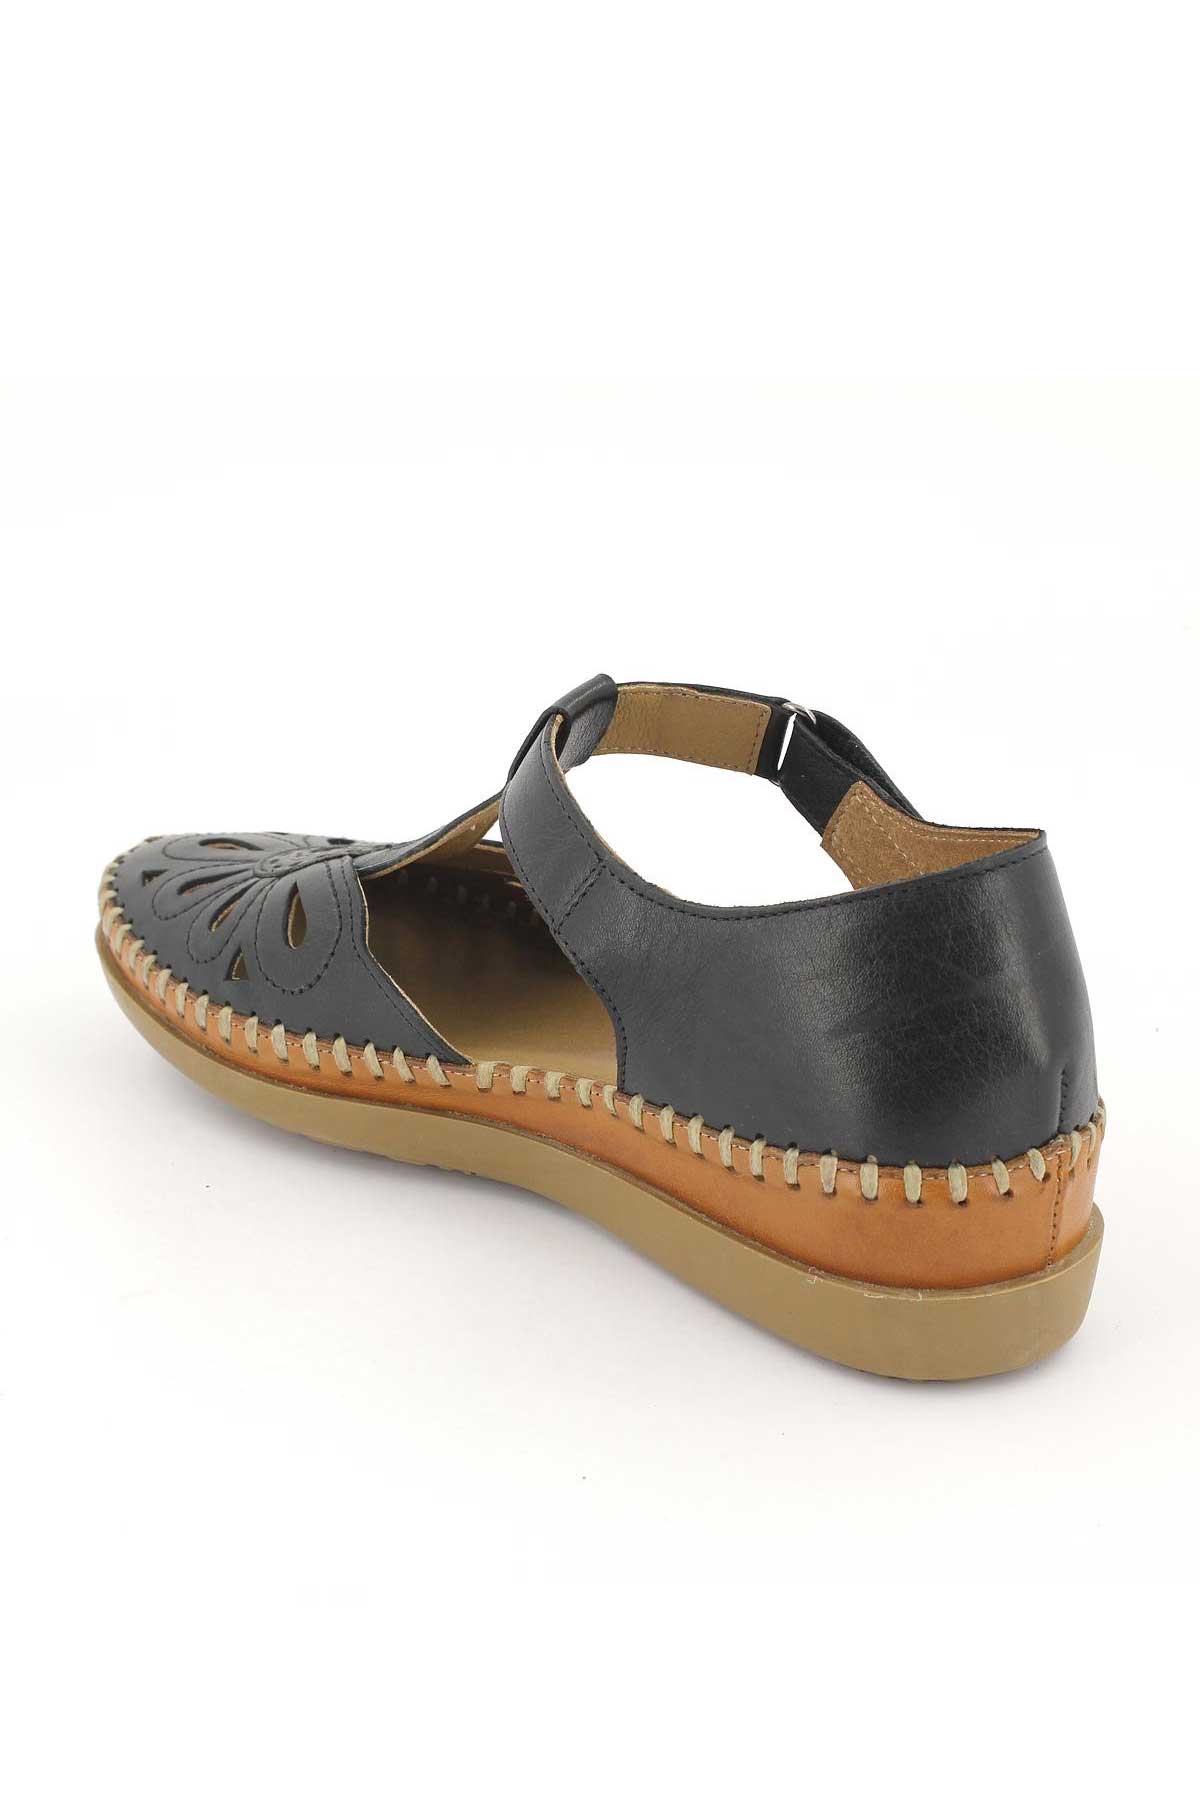 Kadın Comfort Sandalet Siyah 18793505 - Thumbnail